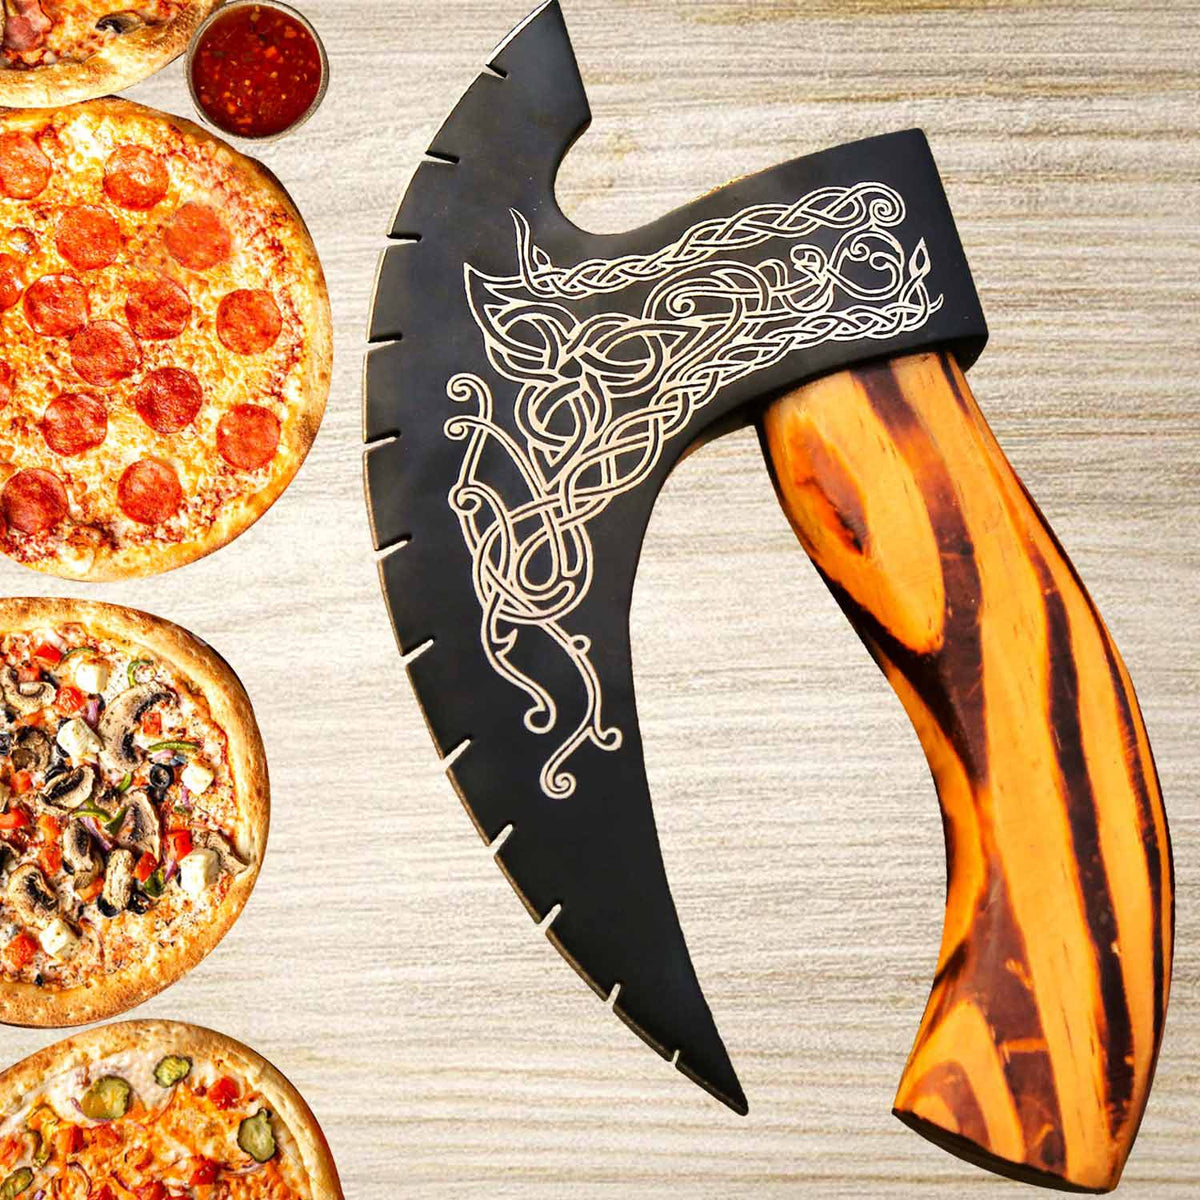 Handmade Pizza Cutter Slicer Viking Axe with Sheath